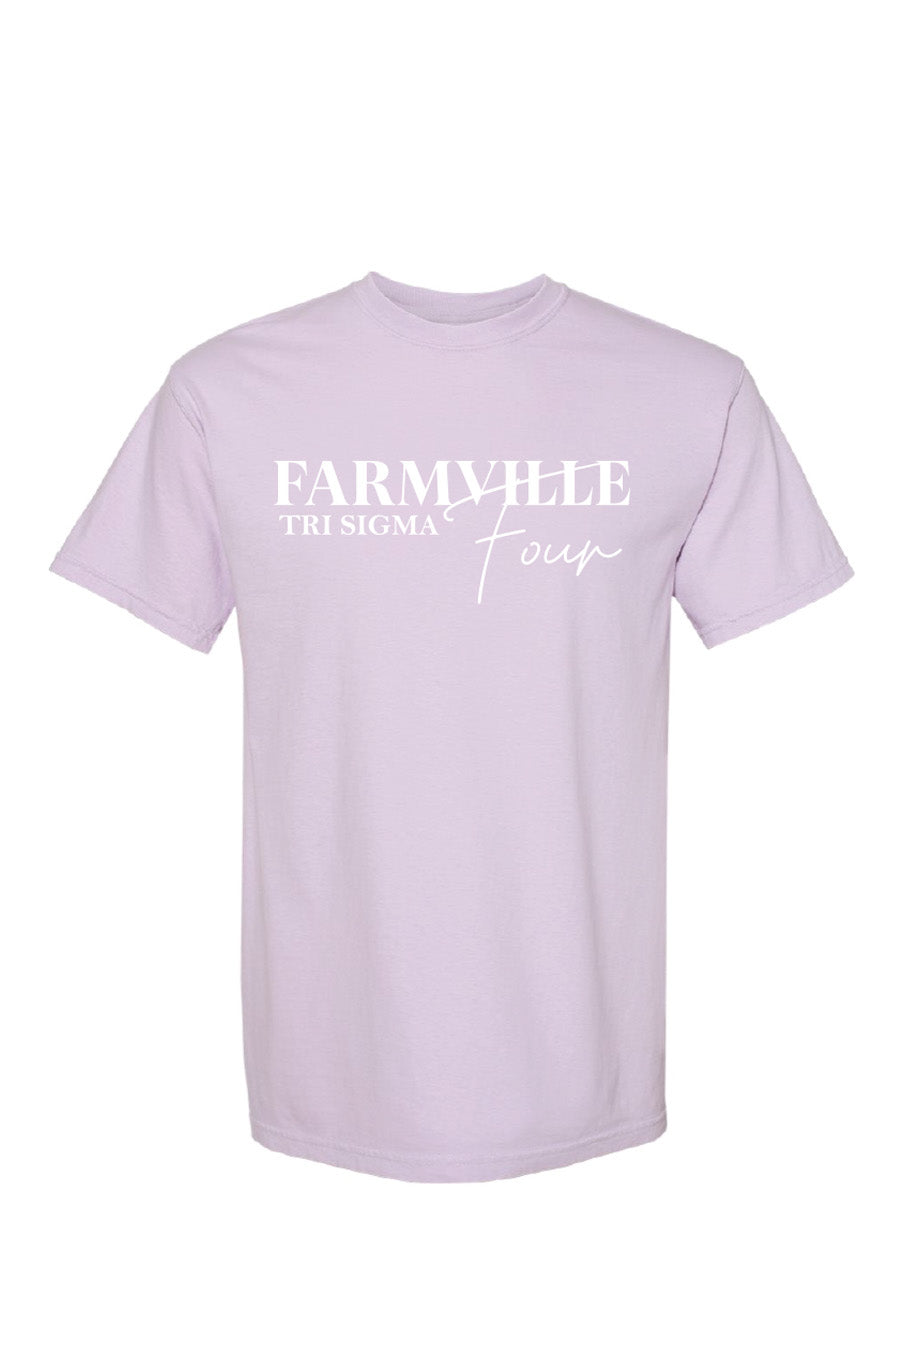 Farmville Four Tee